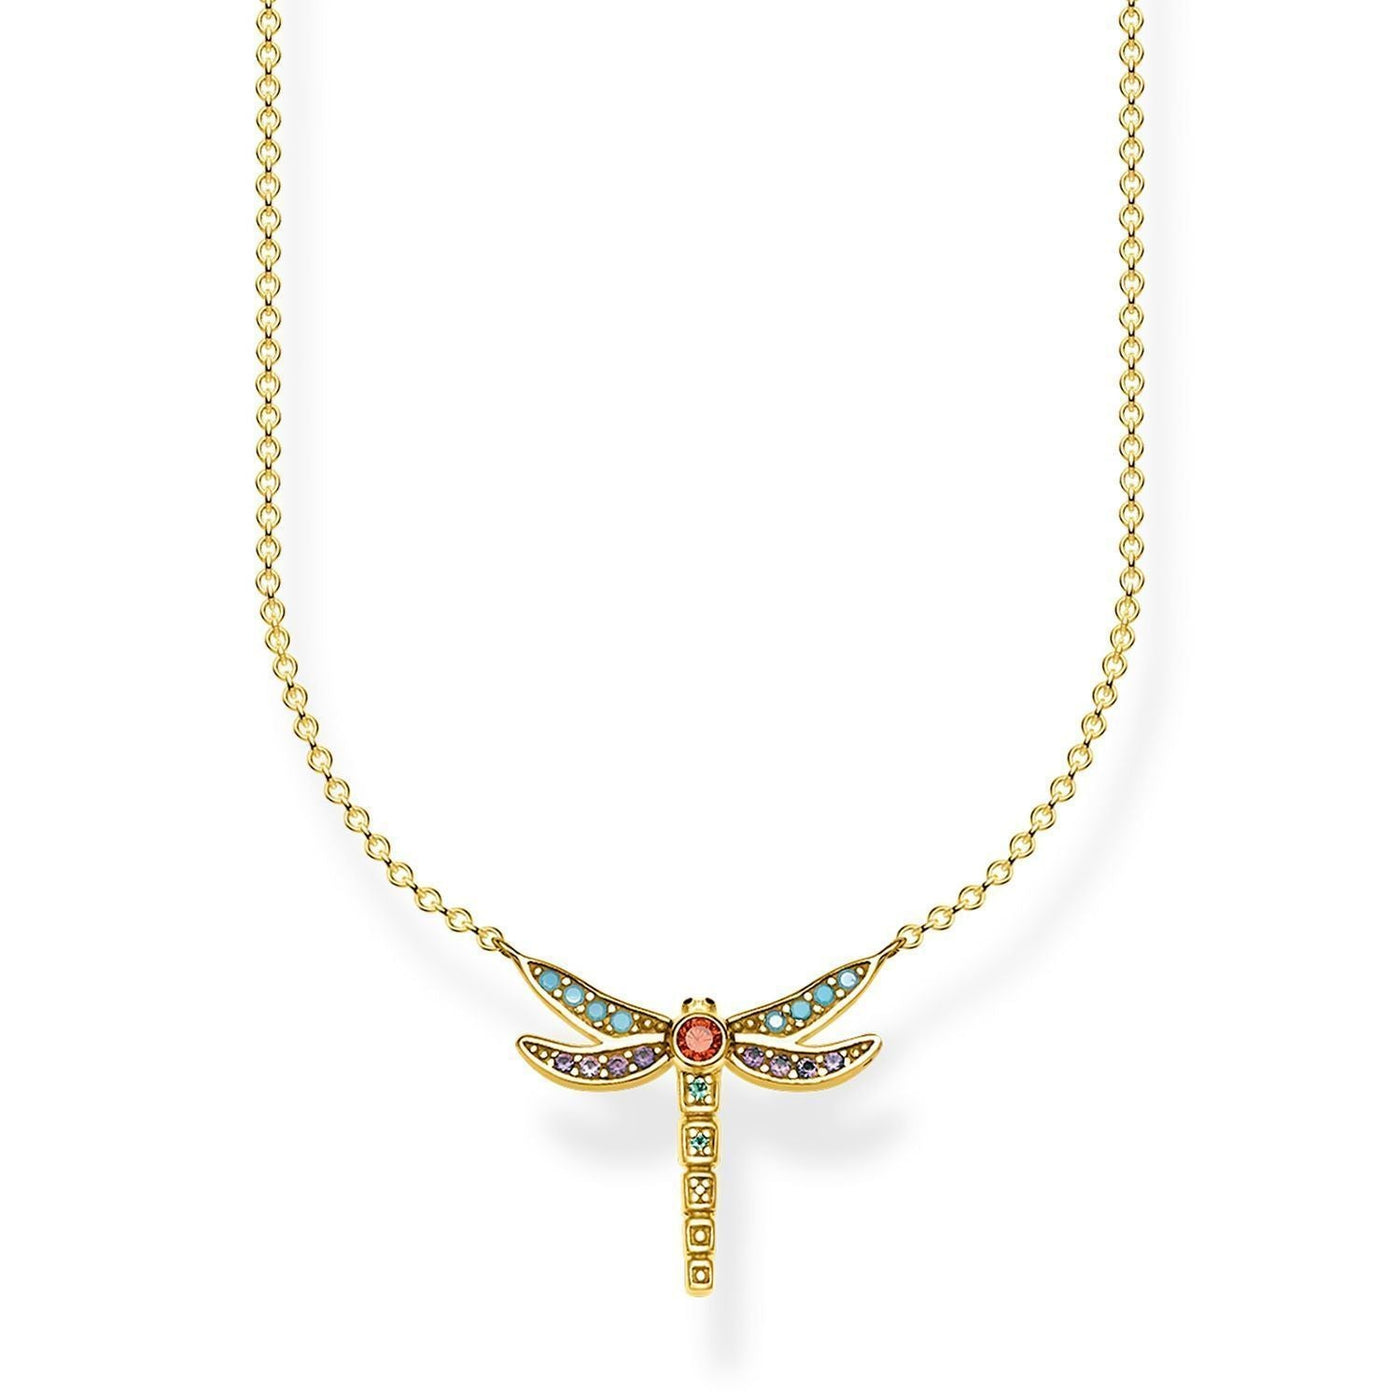 Thomas Sabo Necklace "Dragonfly Small"